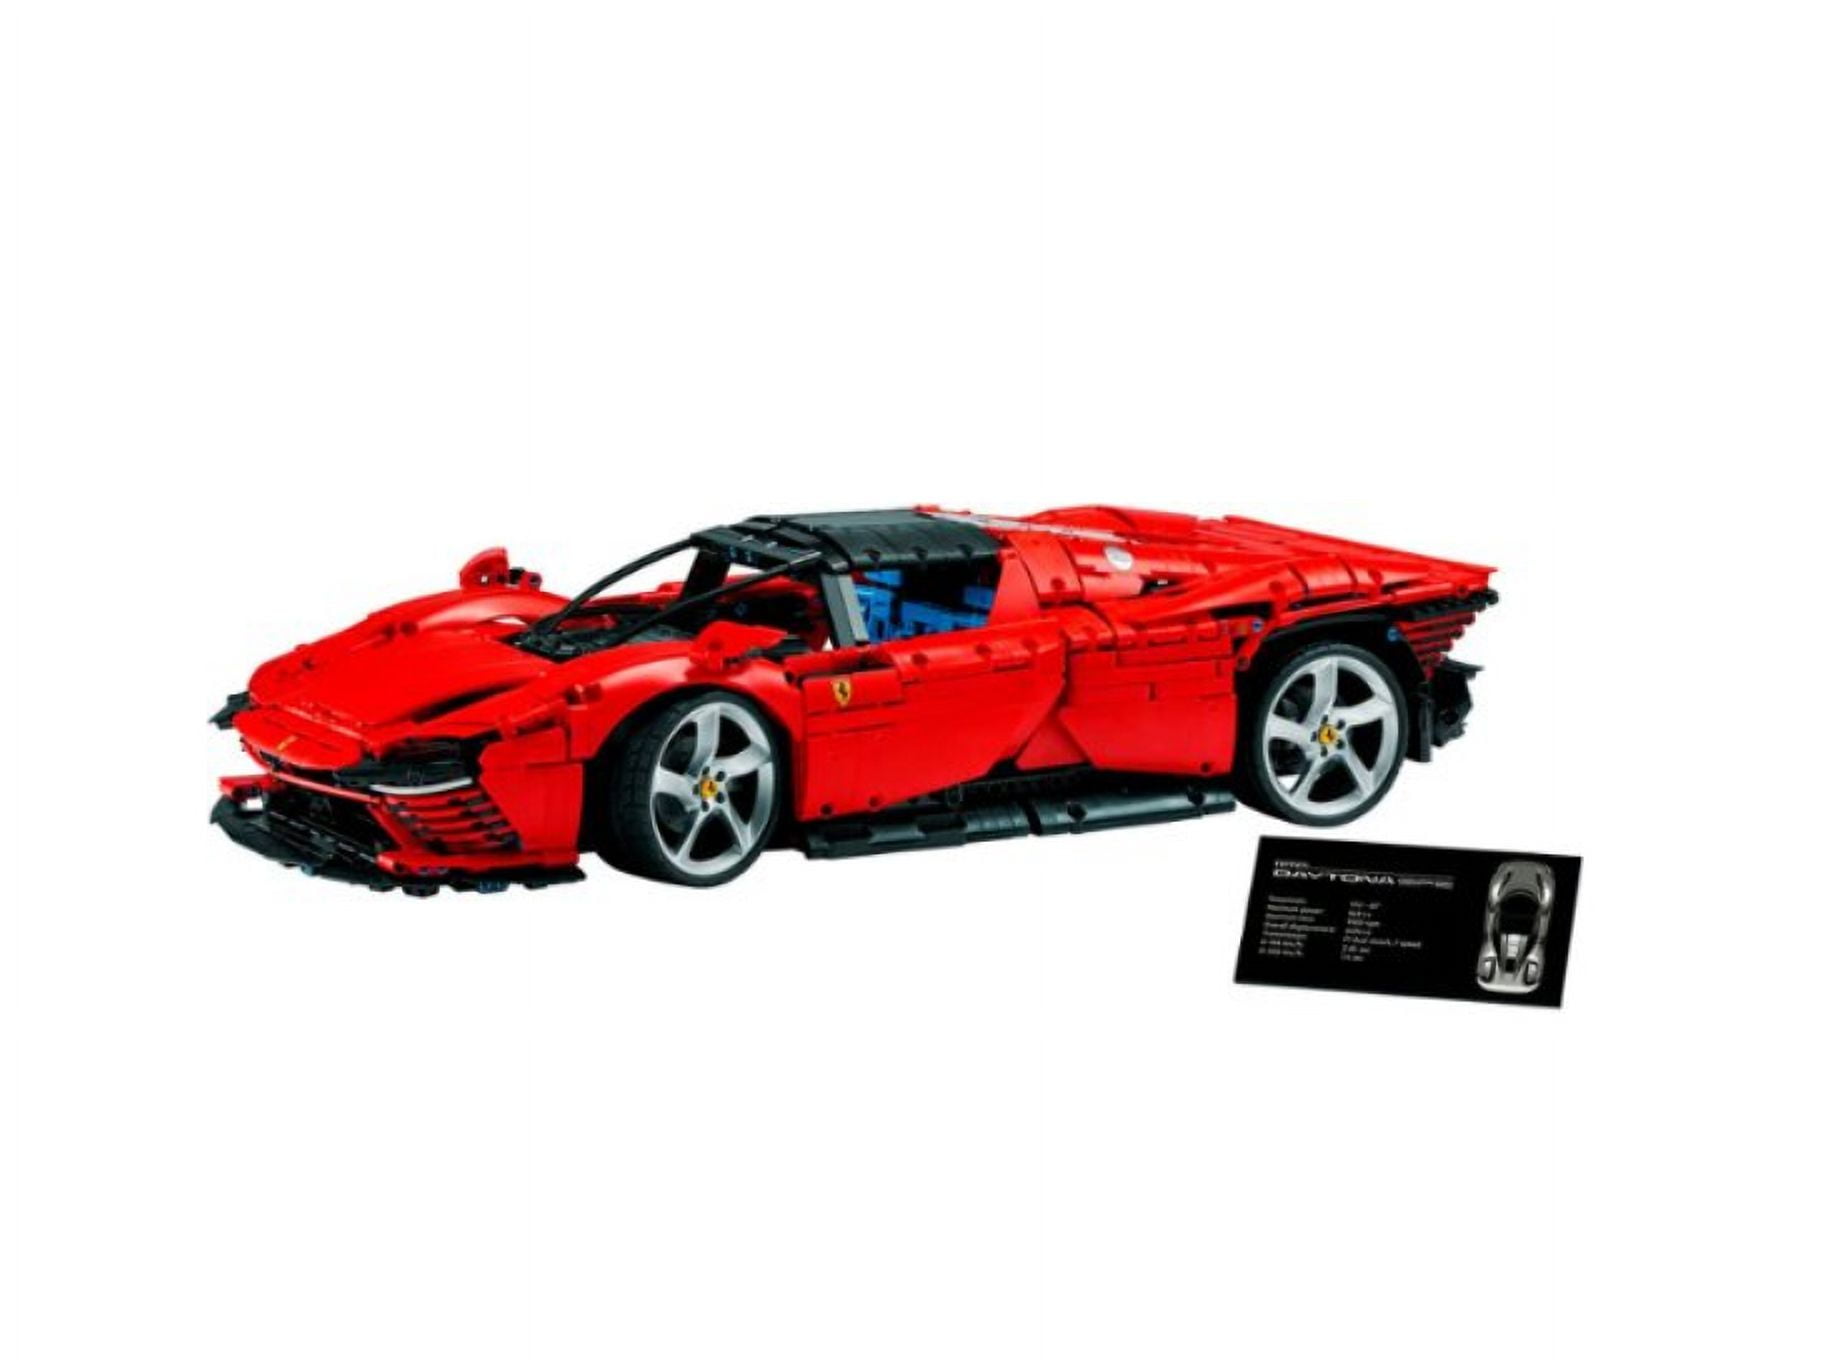 LEGO Technic Ferrari Daytona SP3 42143, Race Car Model Building